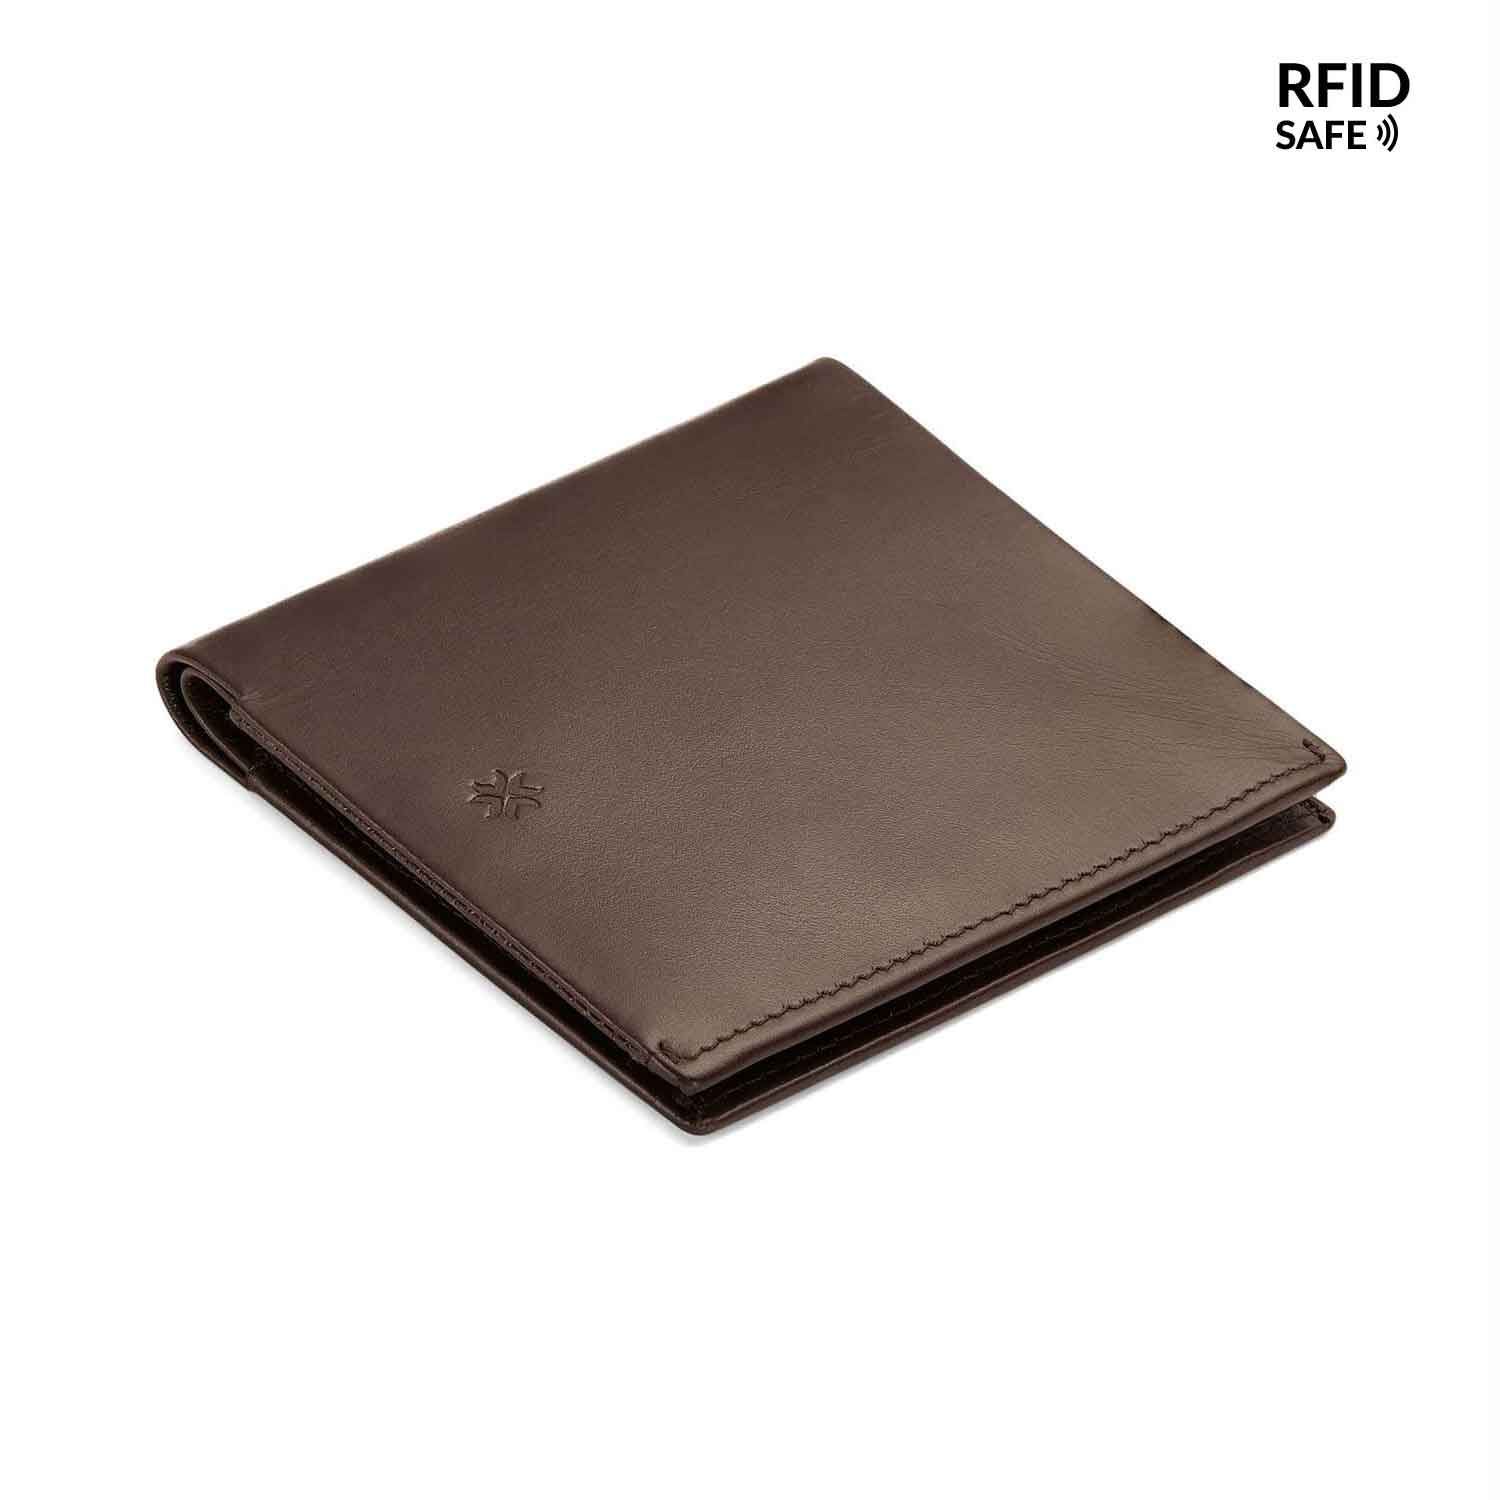 Pennline Rfid Safe Slim Bifold Leather Wallet With Hidden Coin Pocket